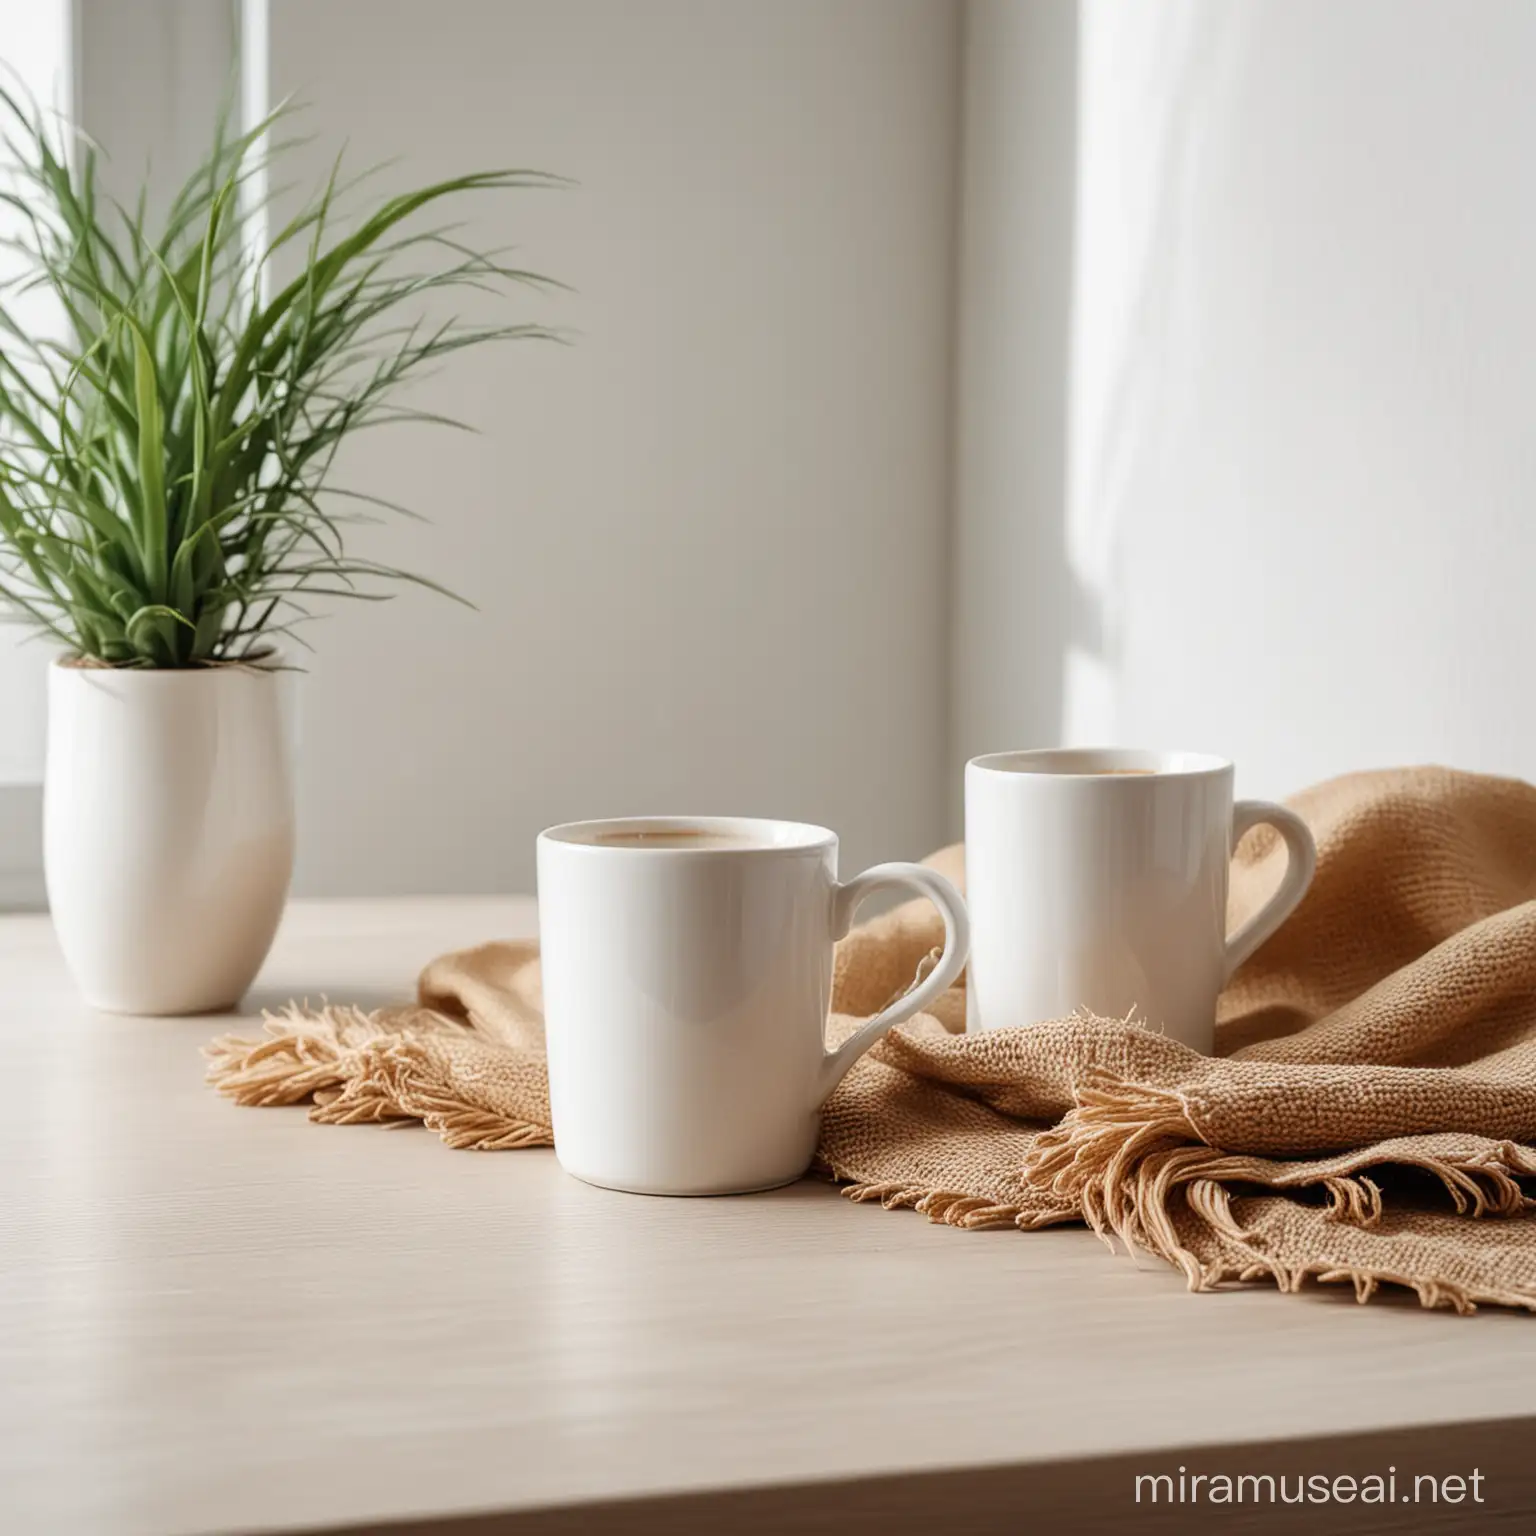 white coffee mug , minimal decor in the background summer decor

